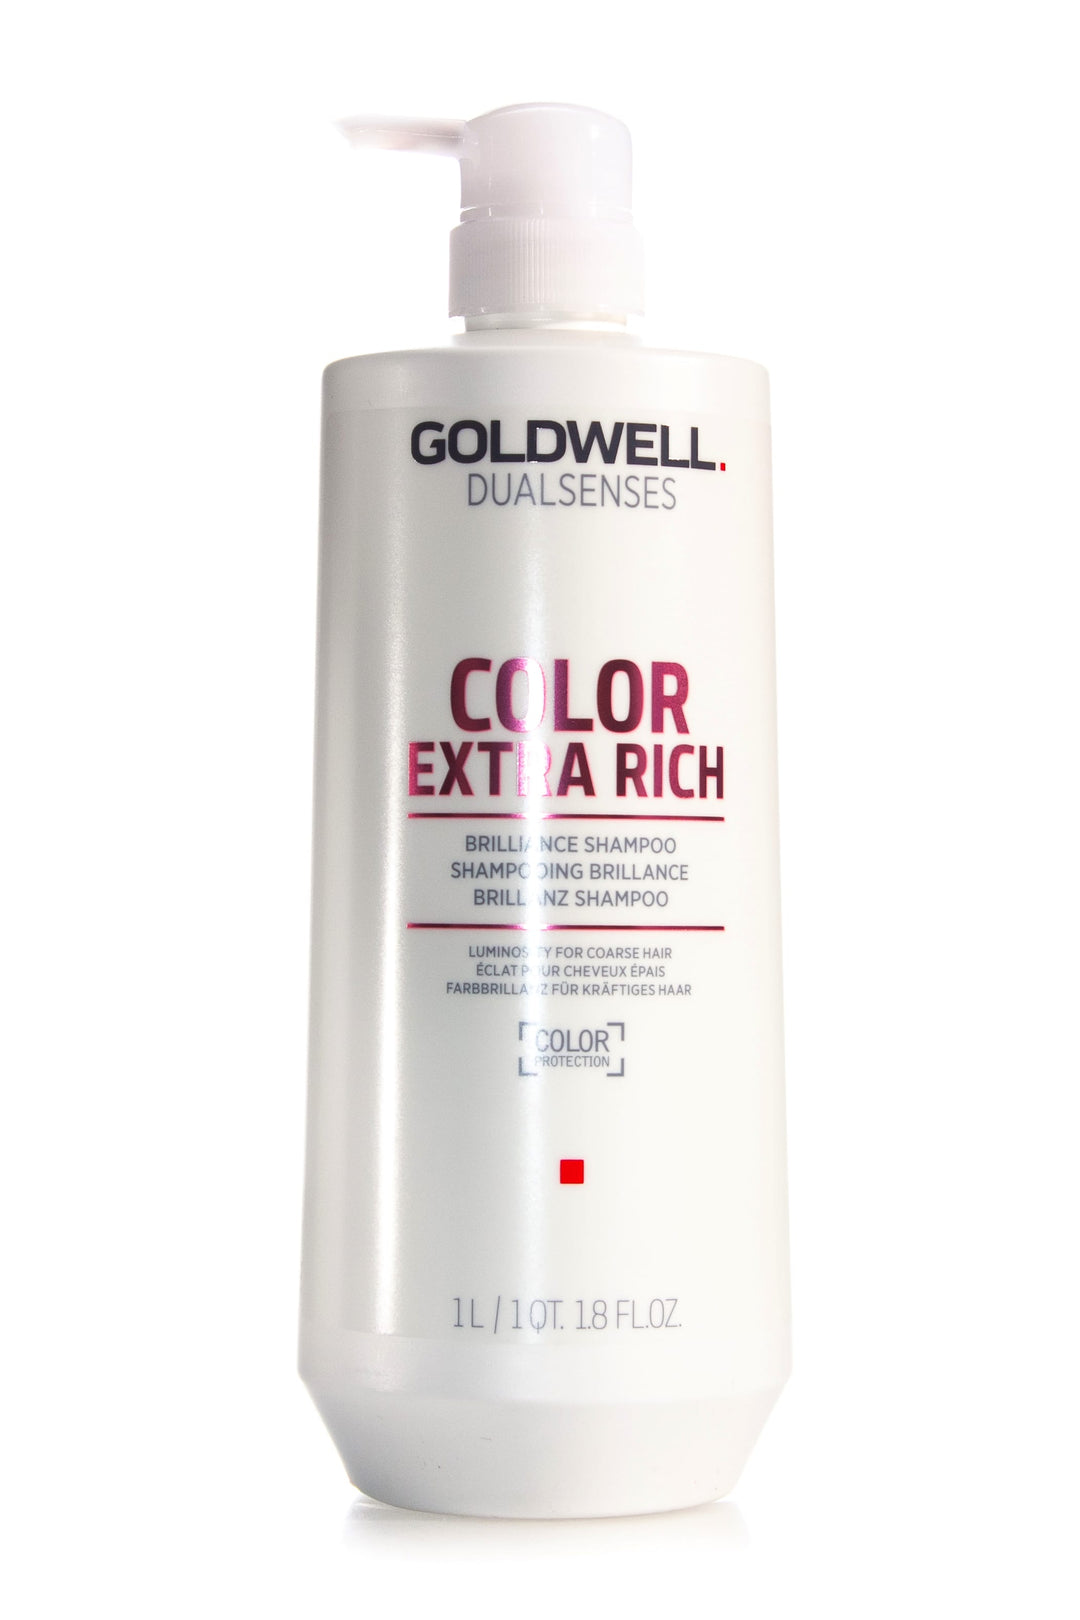 Goldwell Dual Senses Color Extra Rich Brilliance Shampoo